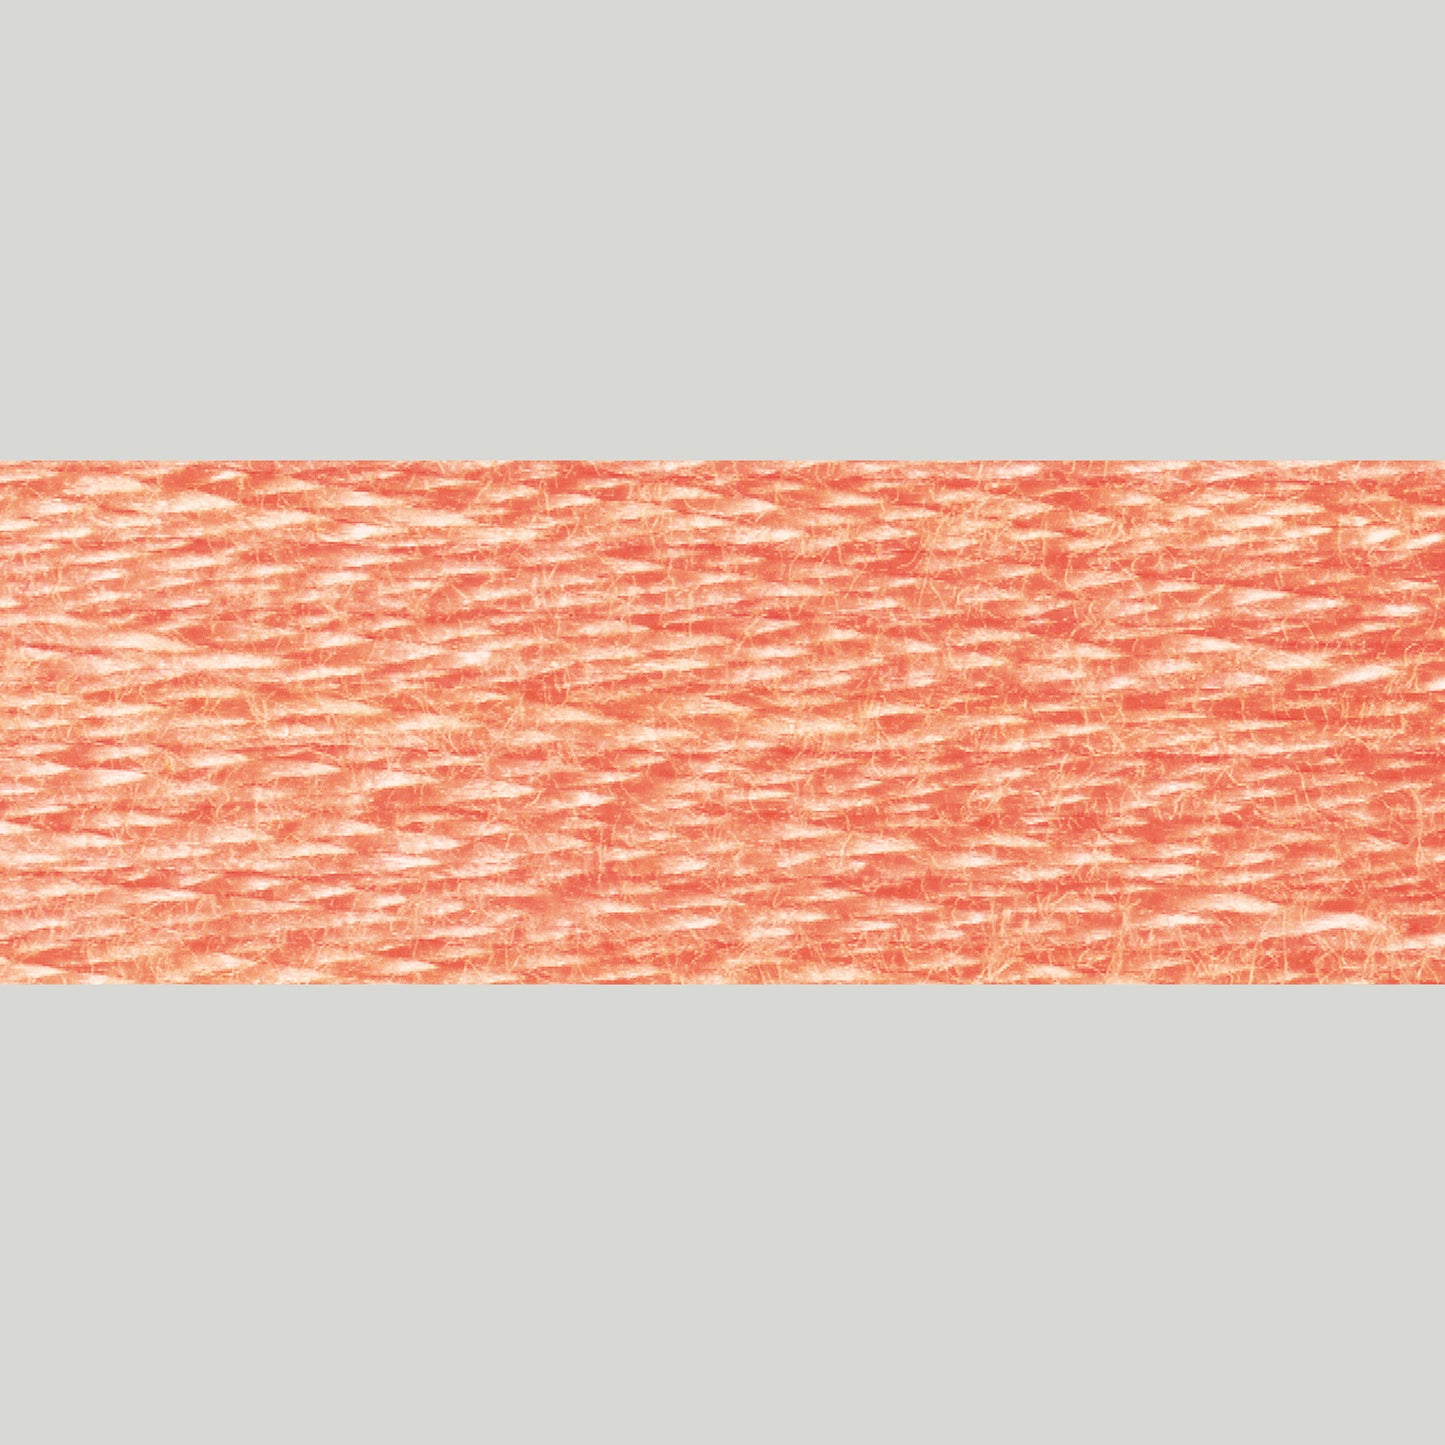 DMC Embroidery Floss - 3824 Light Apricot Alternative View #1